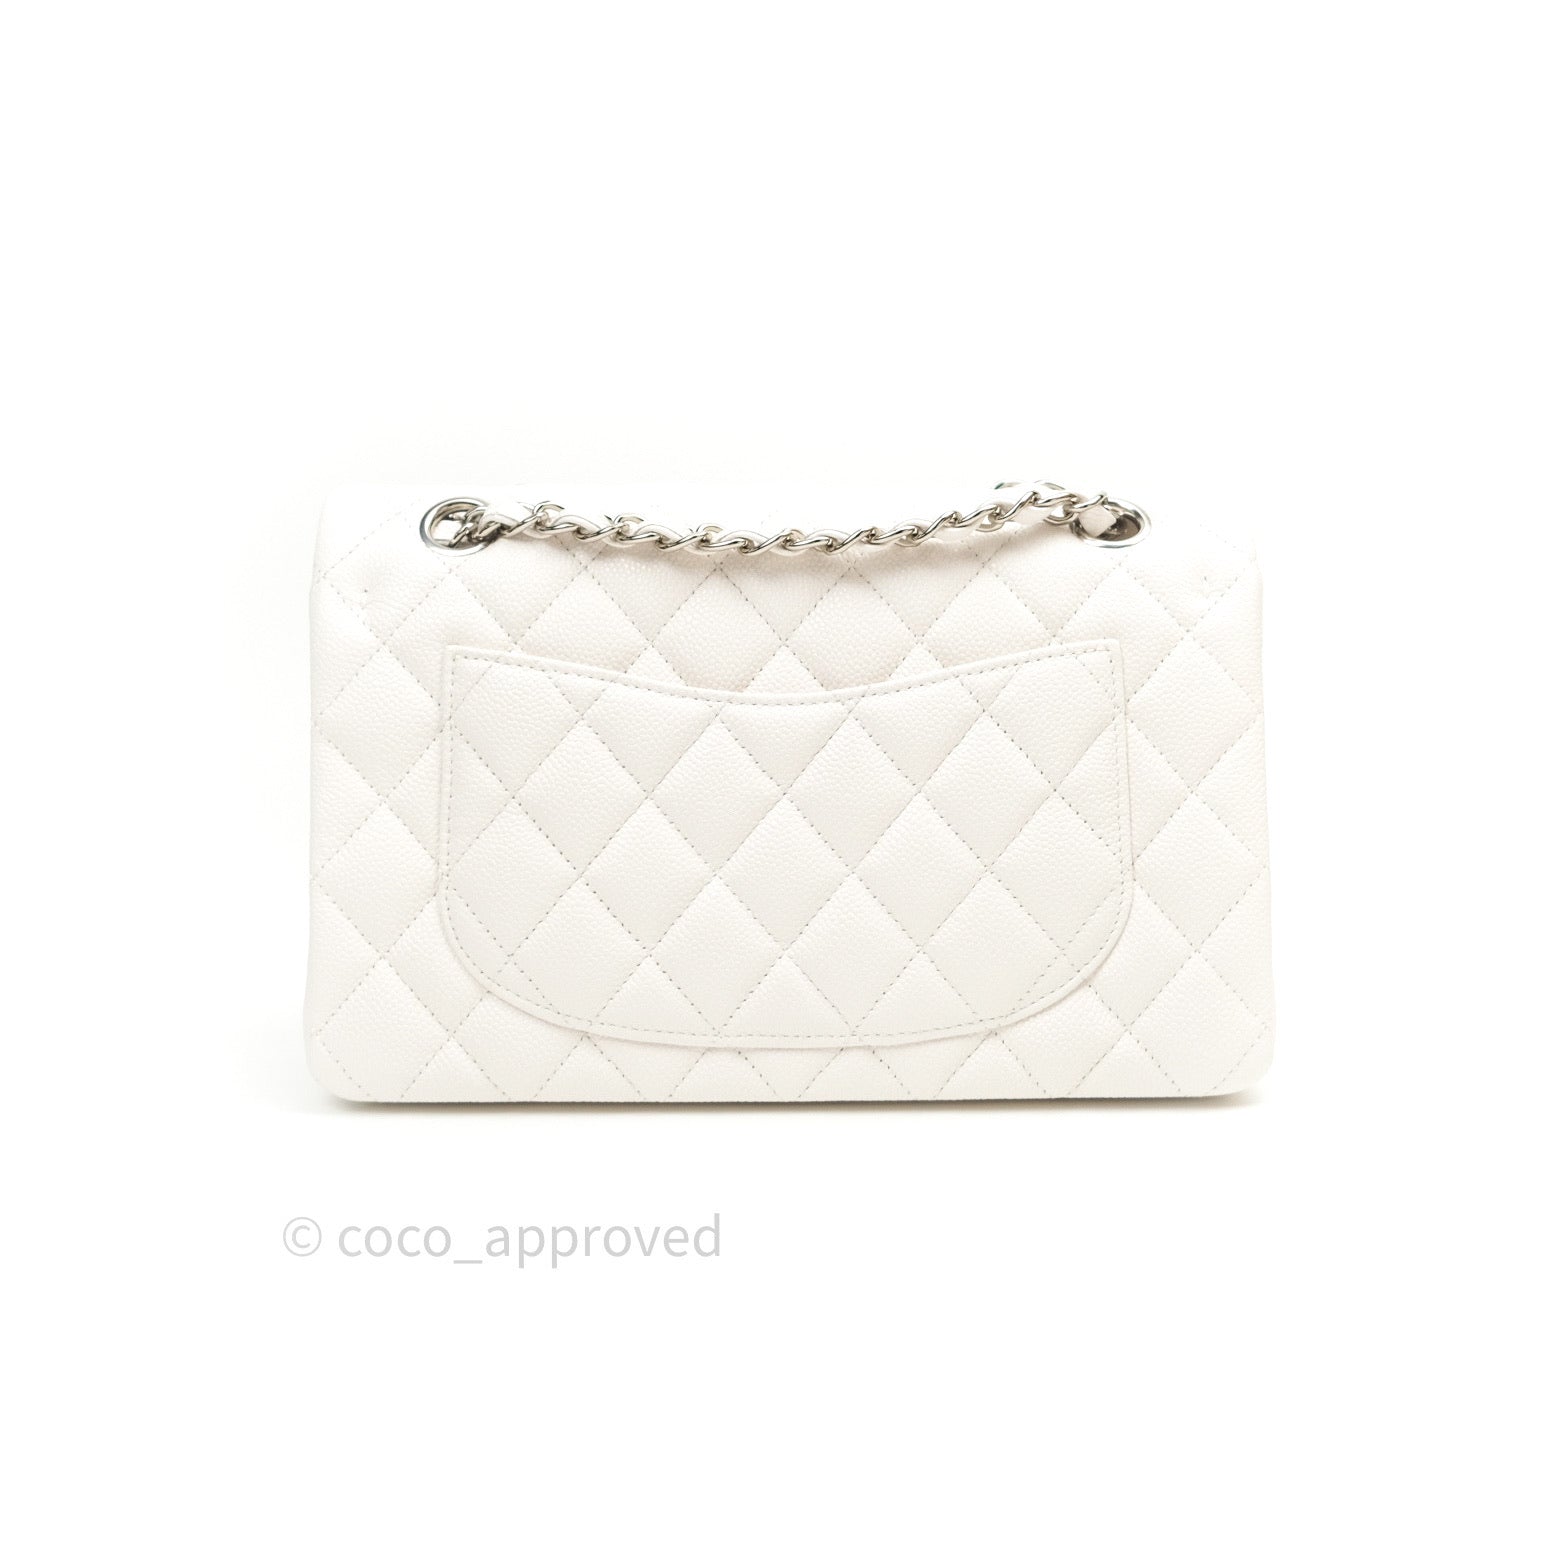 chanel small white handbag purse